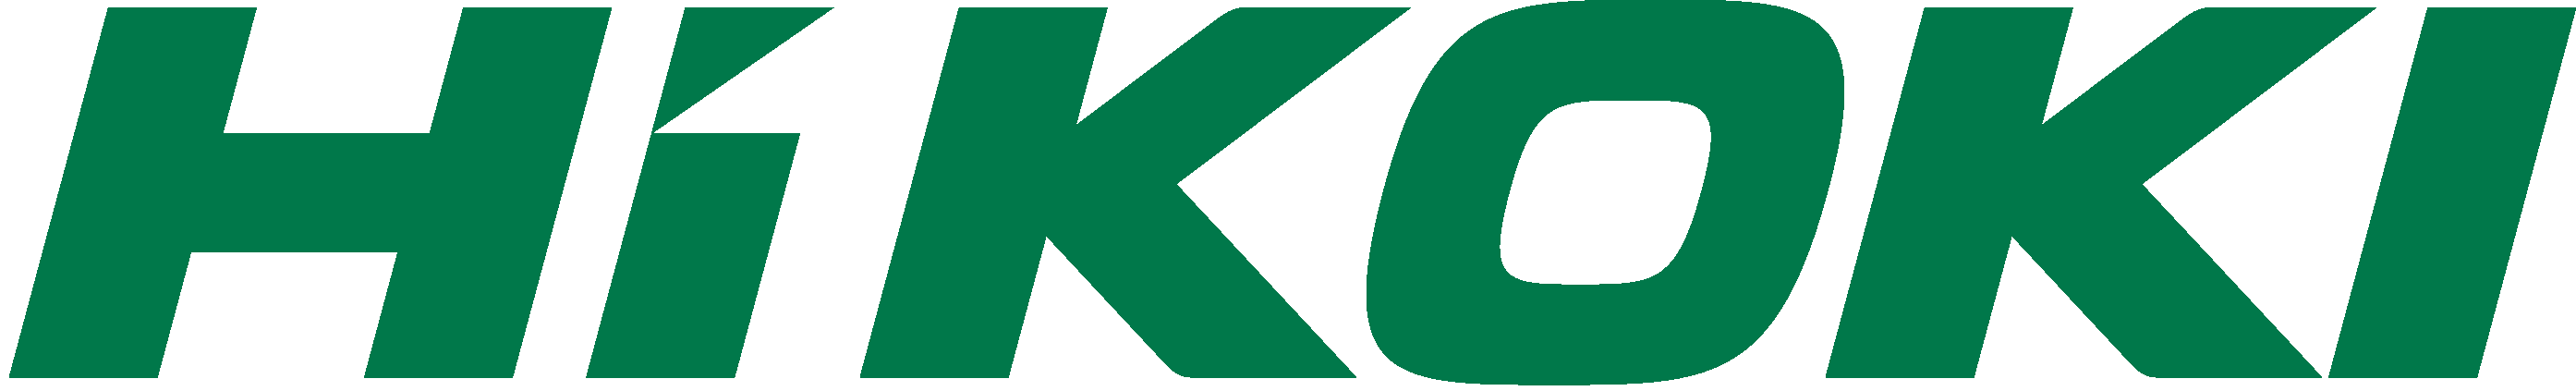 hikoki-logo-green